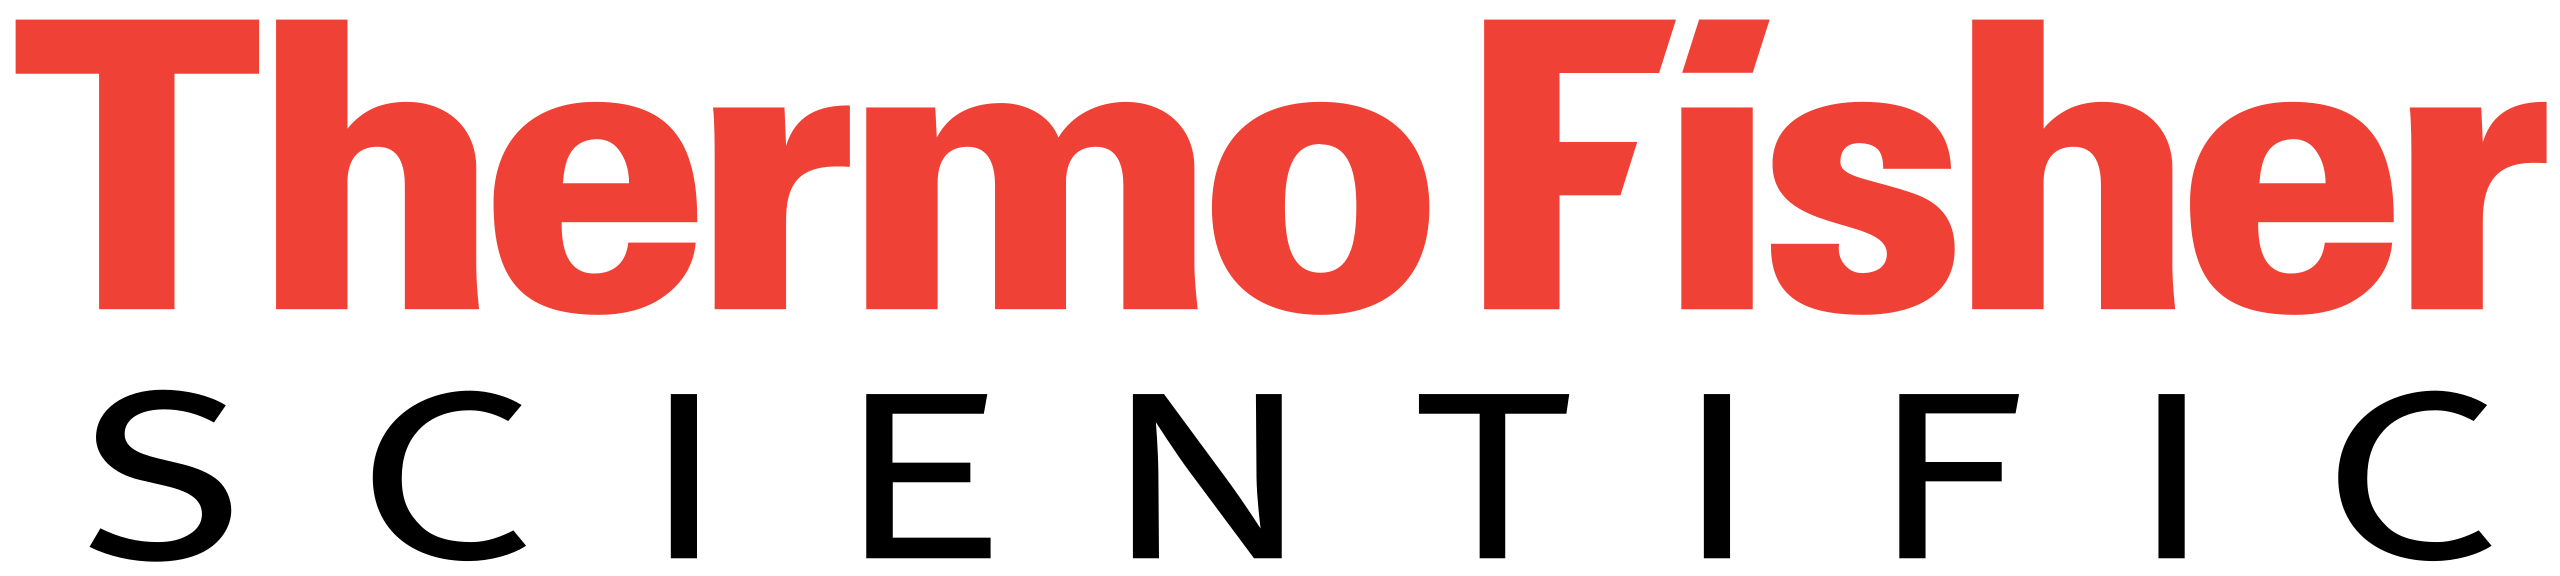 Client/Partner Logo